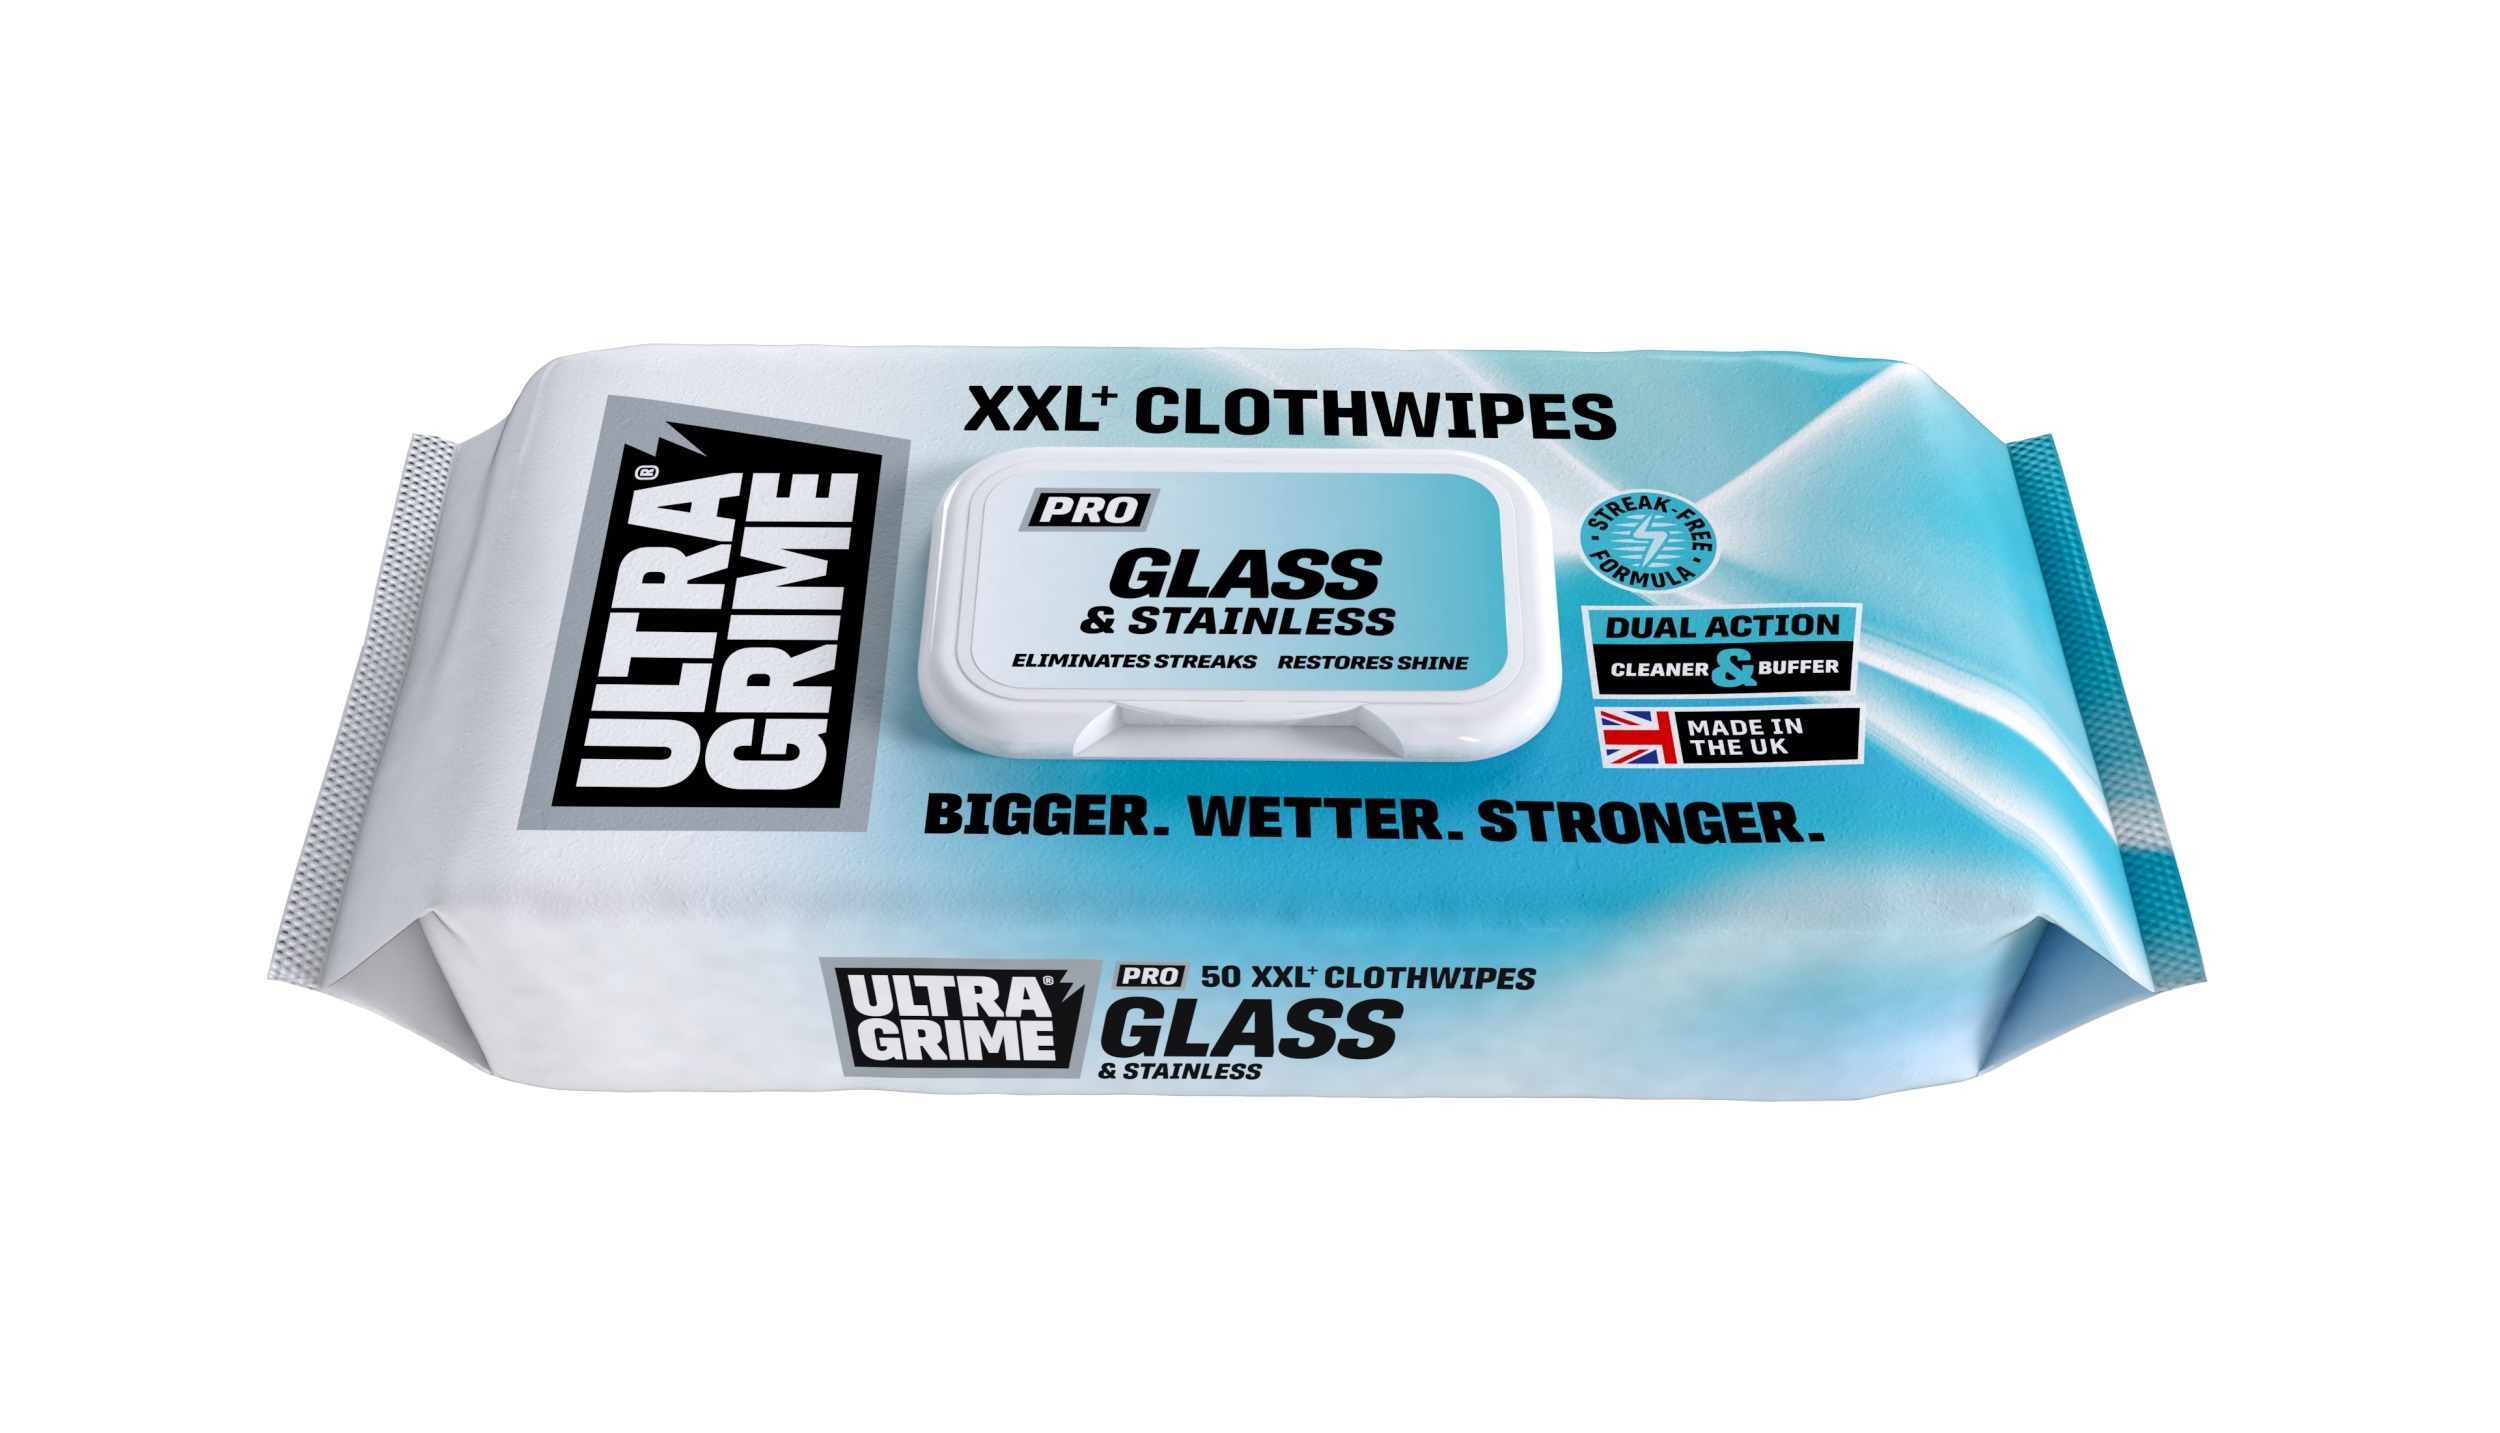 UltraGrime Glass &amp; Stainless XXL Clothwipes - 5980 - 50PK